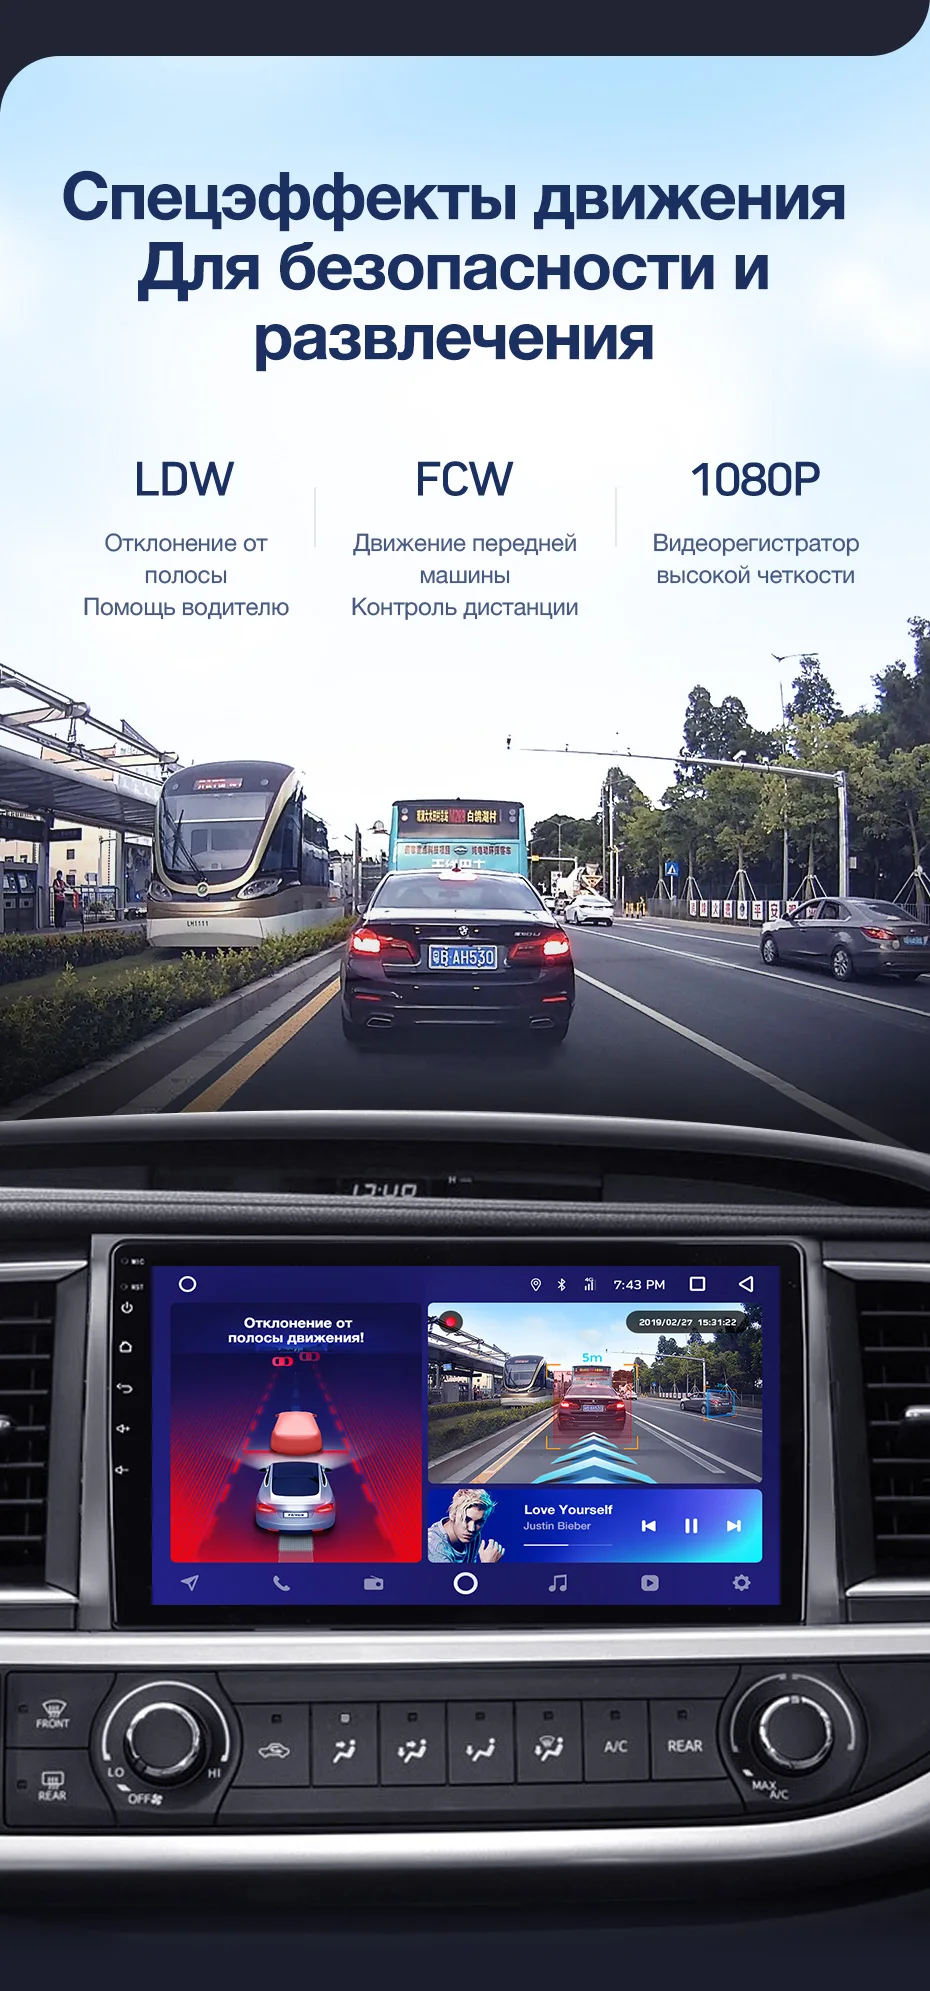 TEYES CC2 Штатная магнитола для Тойота Хайлендер XU50 Toyota Highlander XU50 2013 Android 8.1, до 8-ЯДЕР, до 4+ 64ГБ 32EQ+ DSP 2DIN автомагнитола 2 DIN DVD GPS мультимедиа автомобиля головное устройство